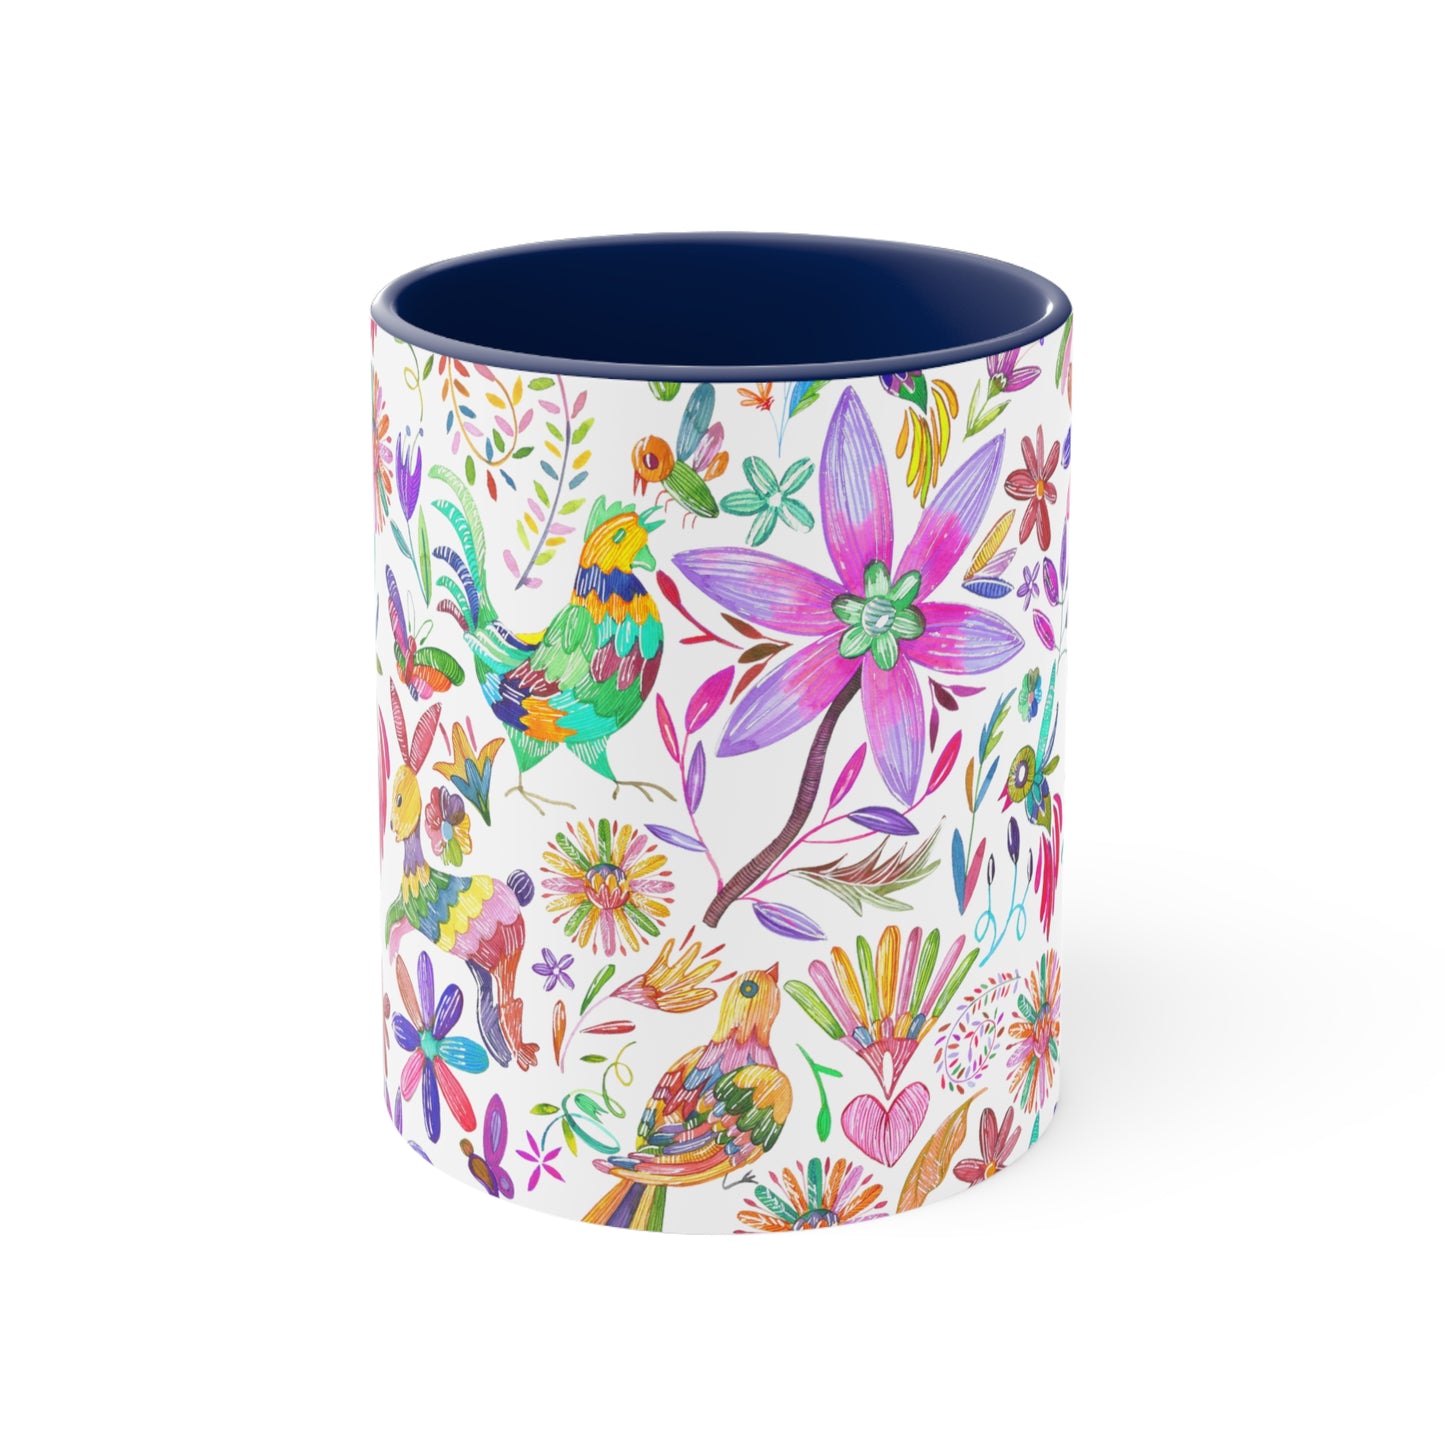 Colorful Otomi Coffee Mug, 11oz with animals and plants for mom or friends. Mexican folk art mug. Mexican ceramic coffee mug